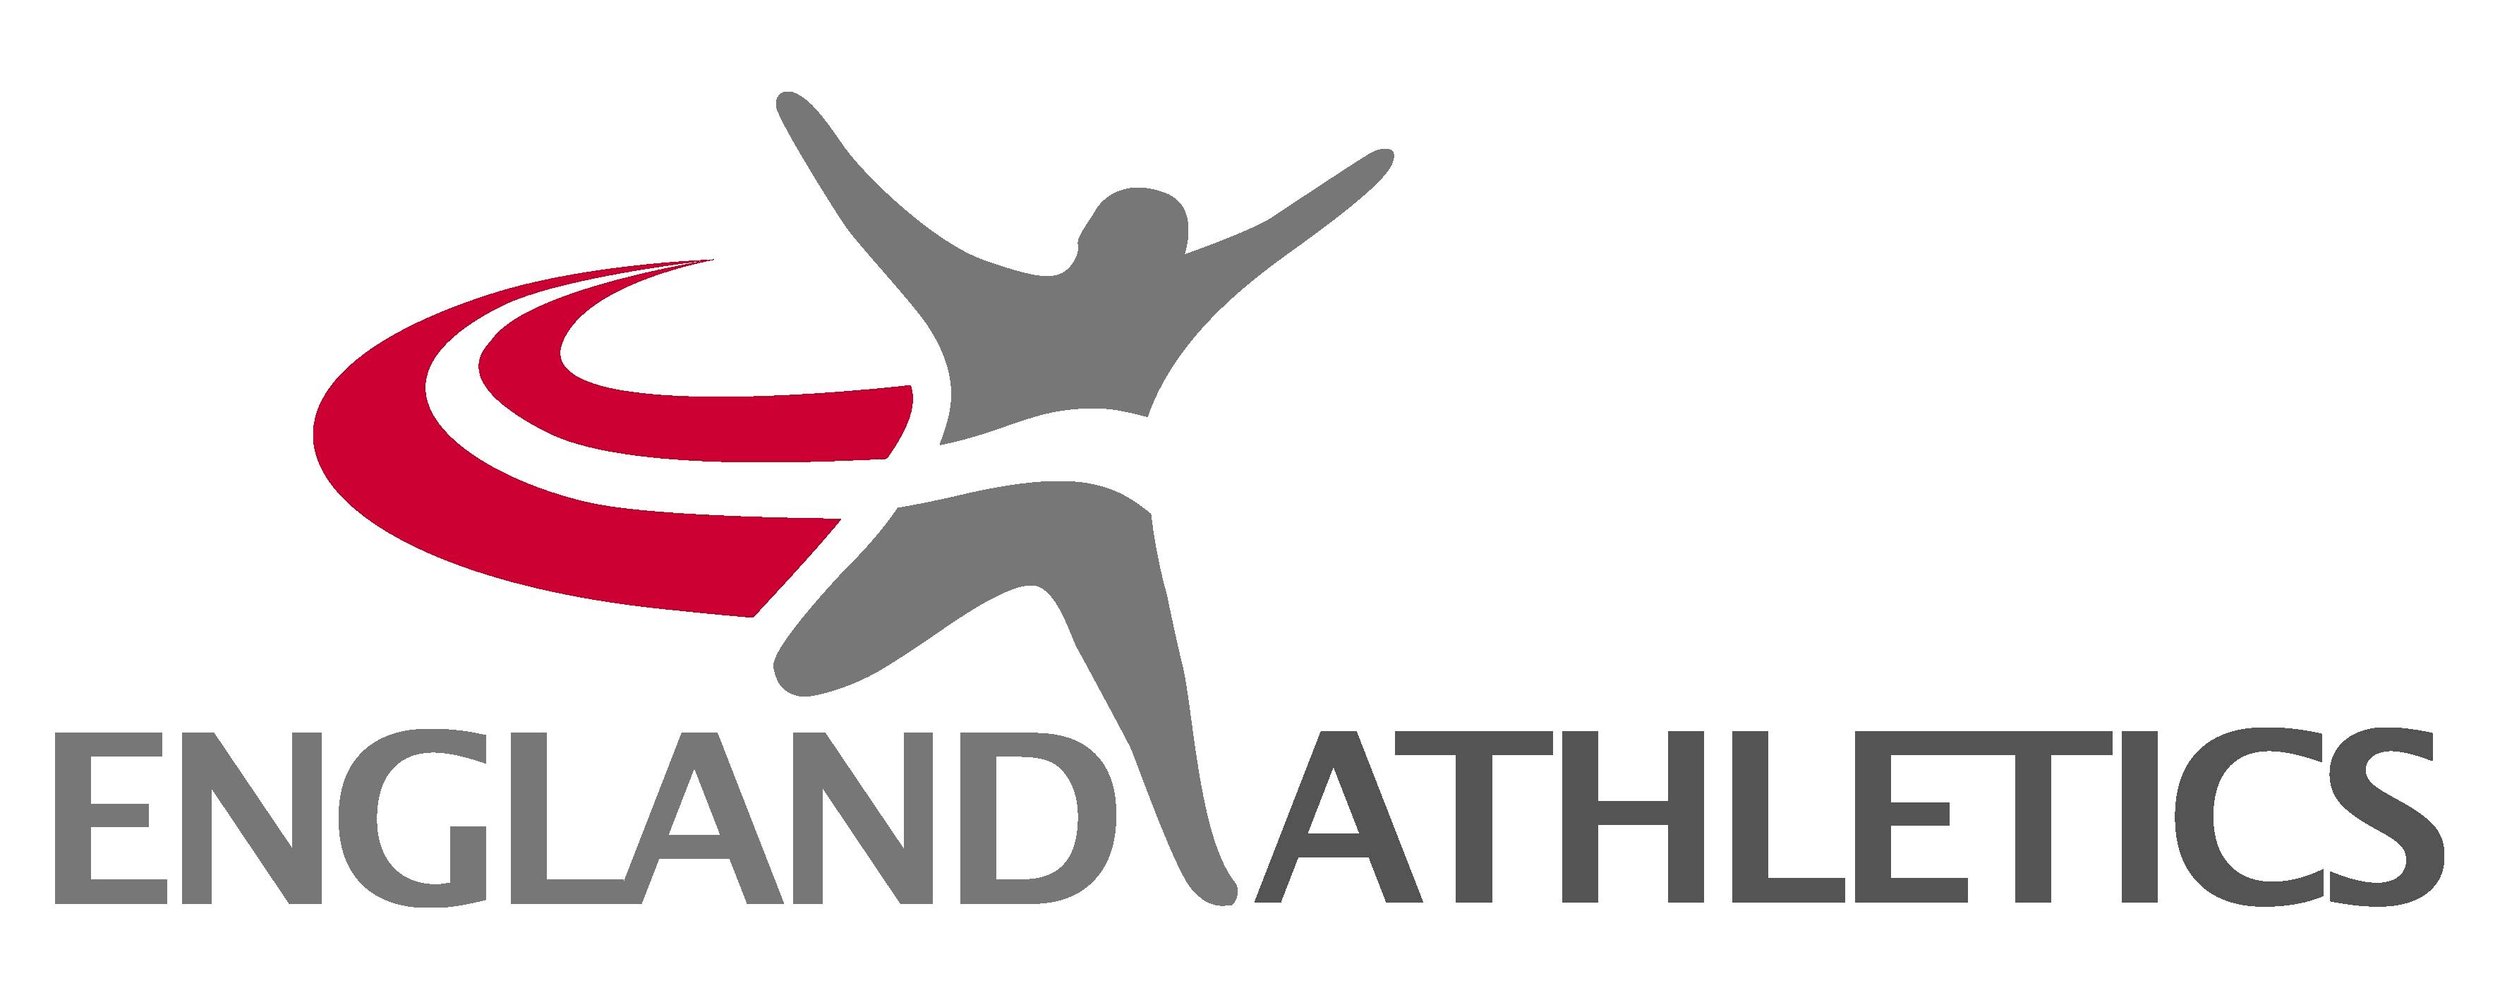 england athletics logo (1).jpg